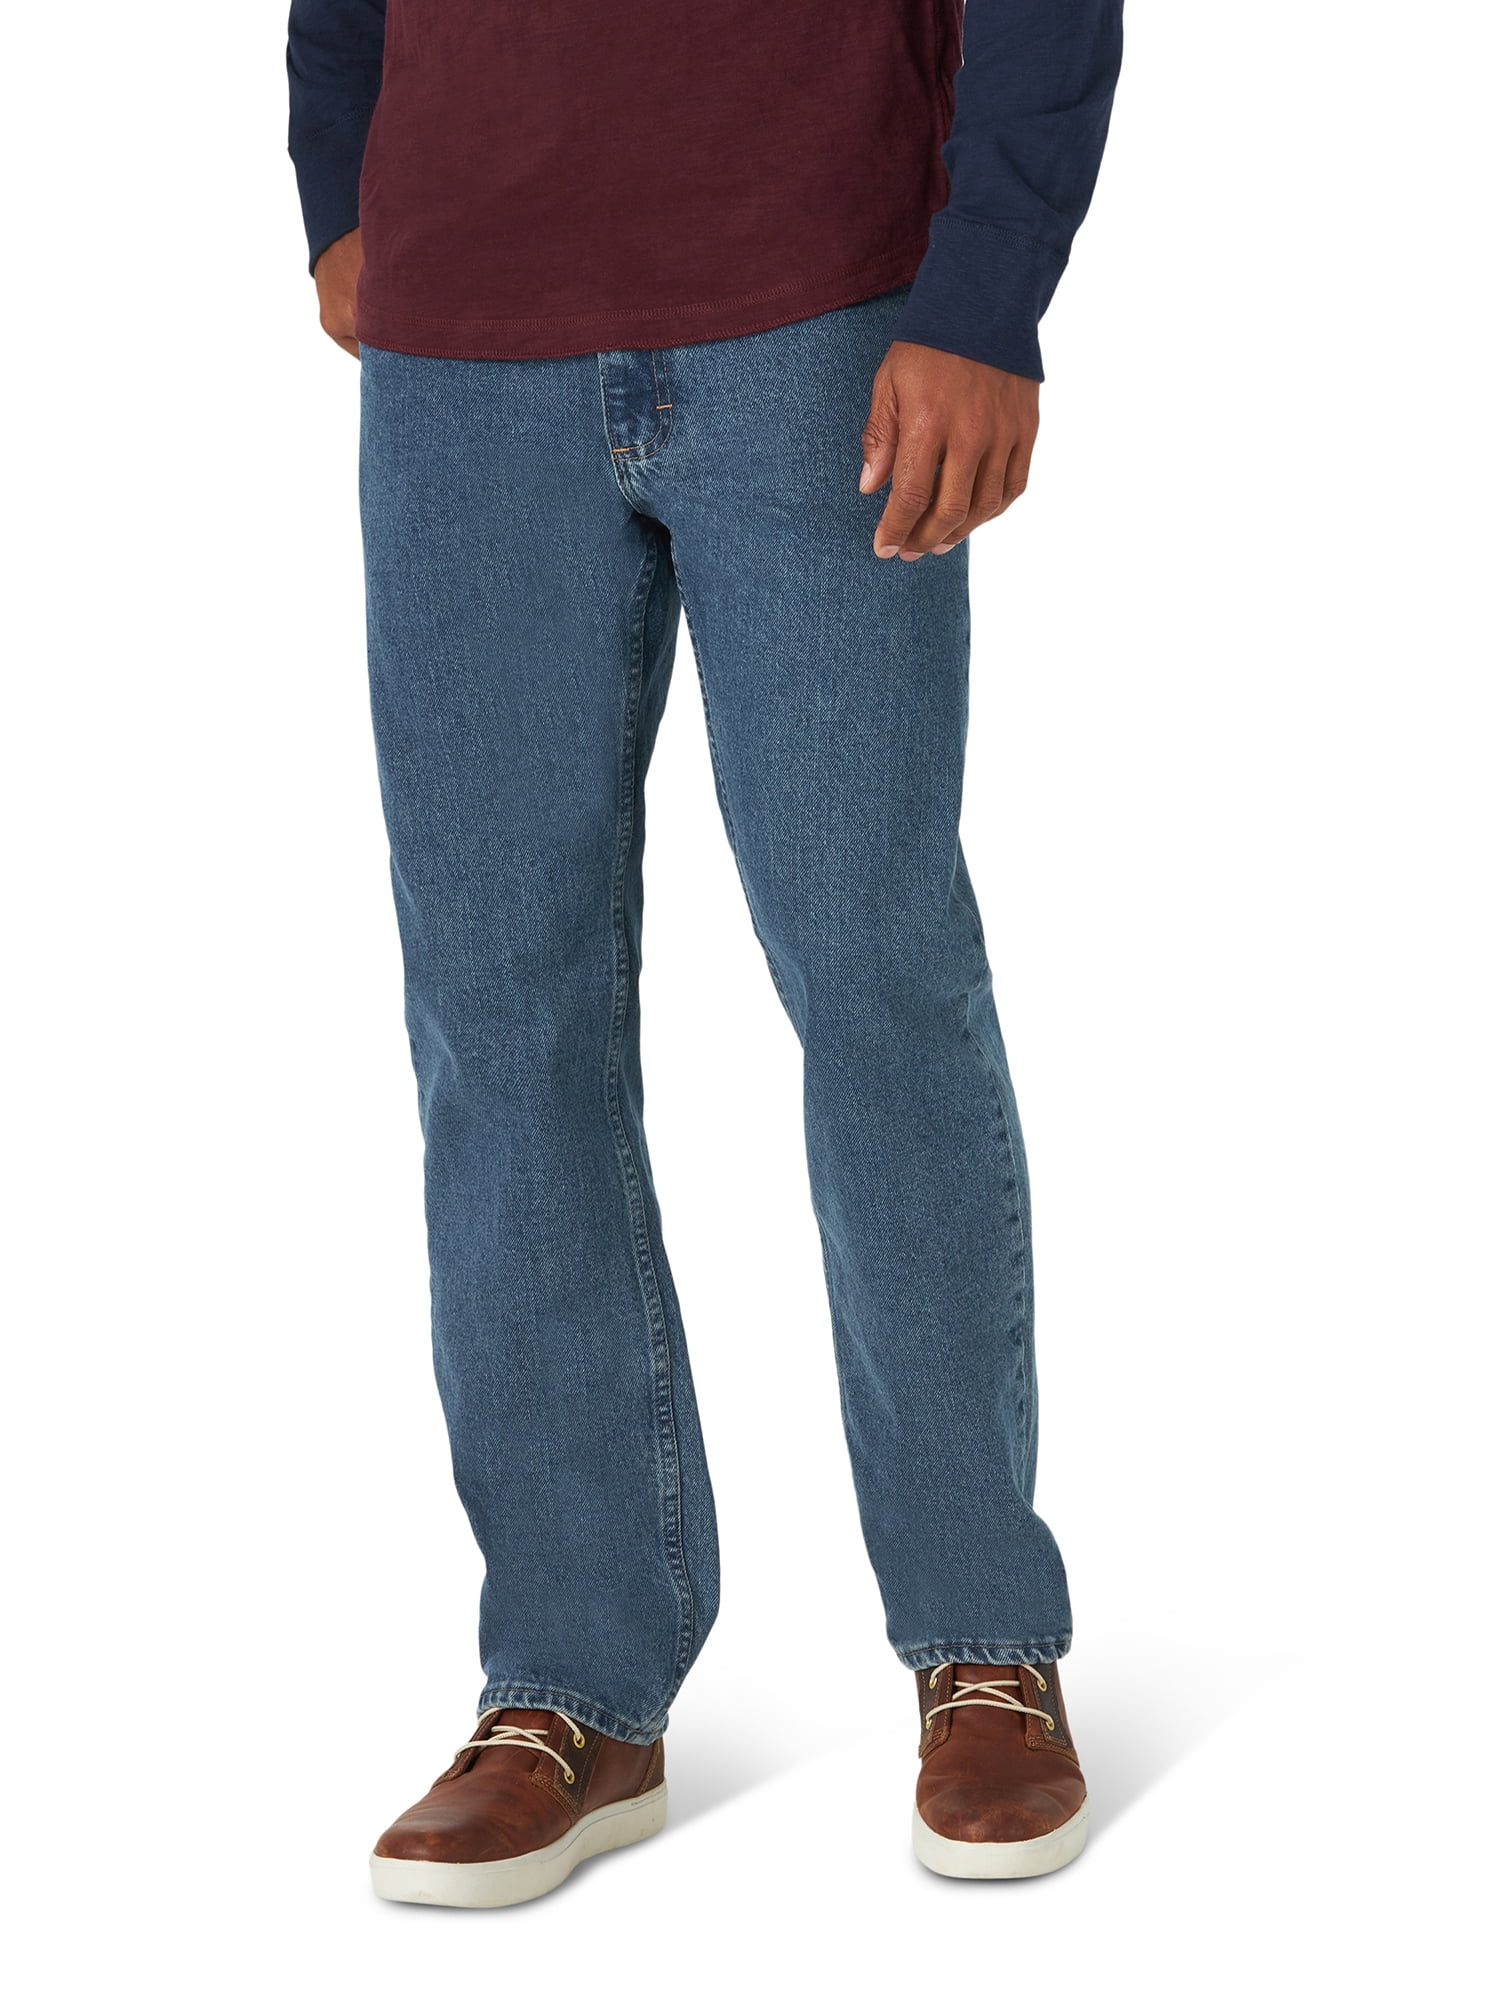 Men's Barbour Regular Fit Jeans